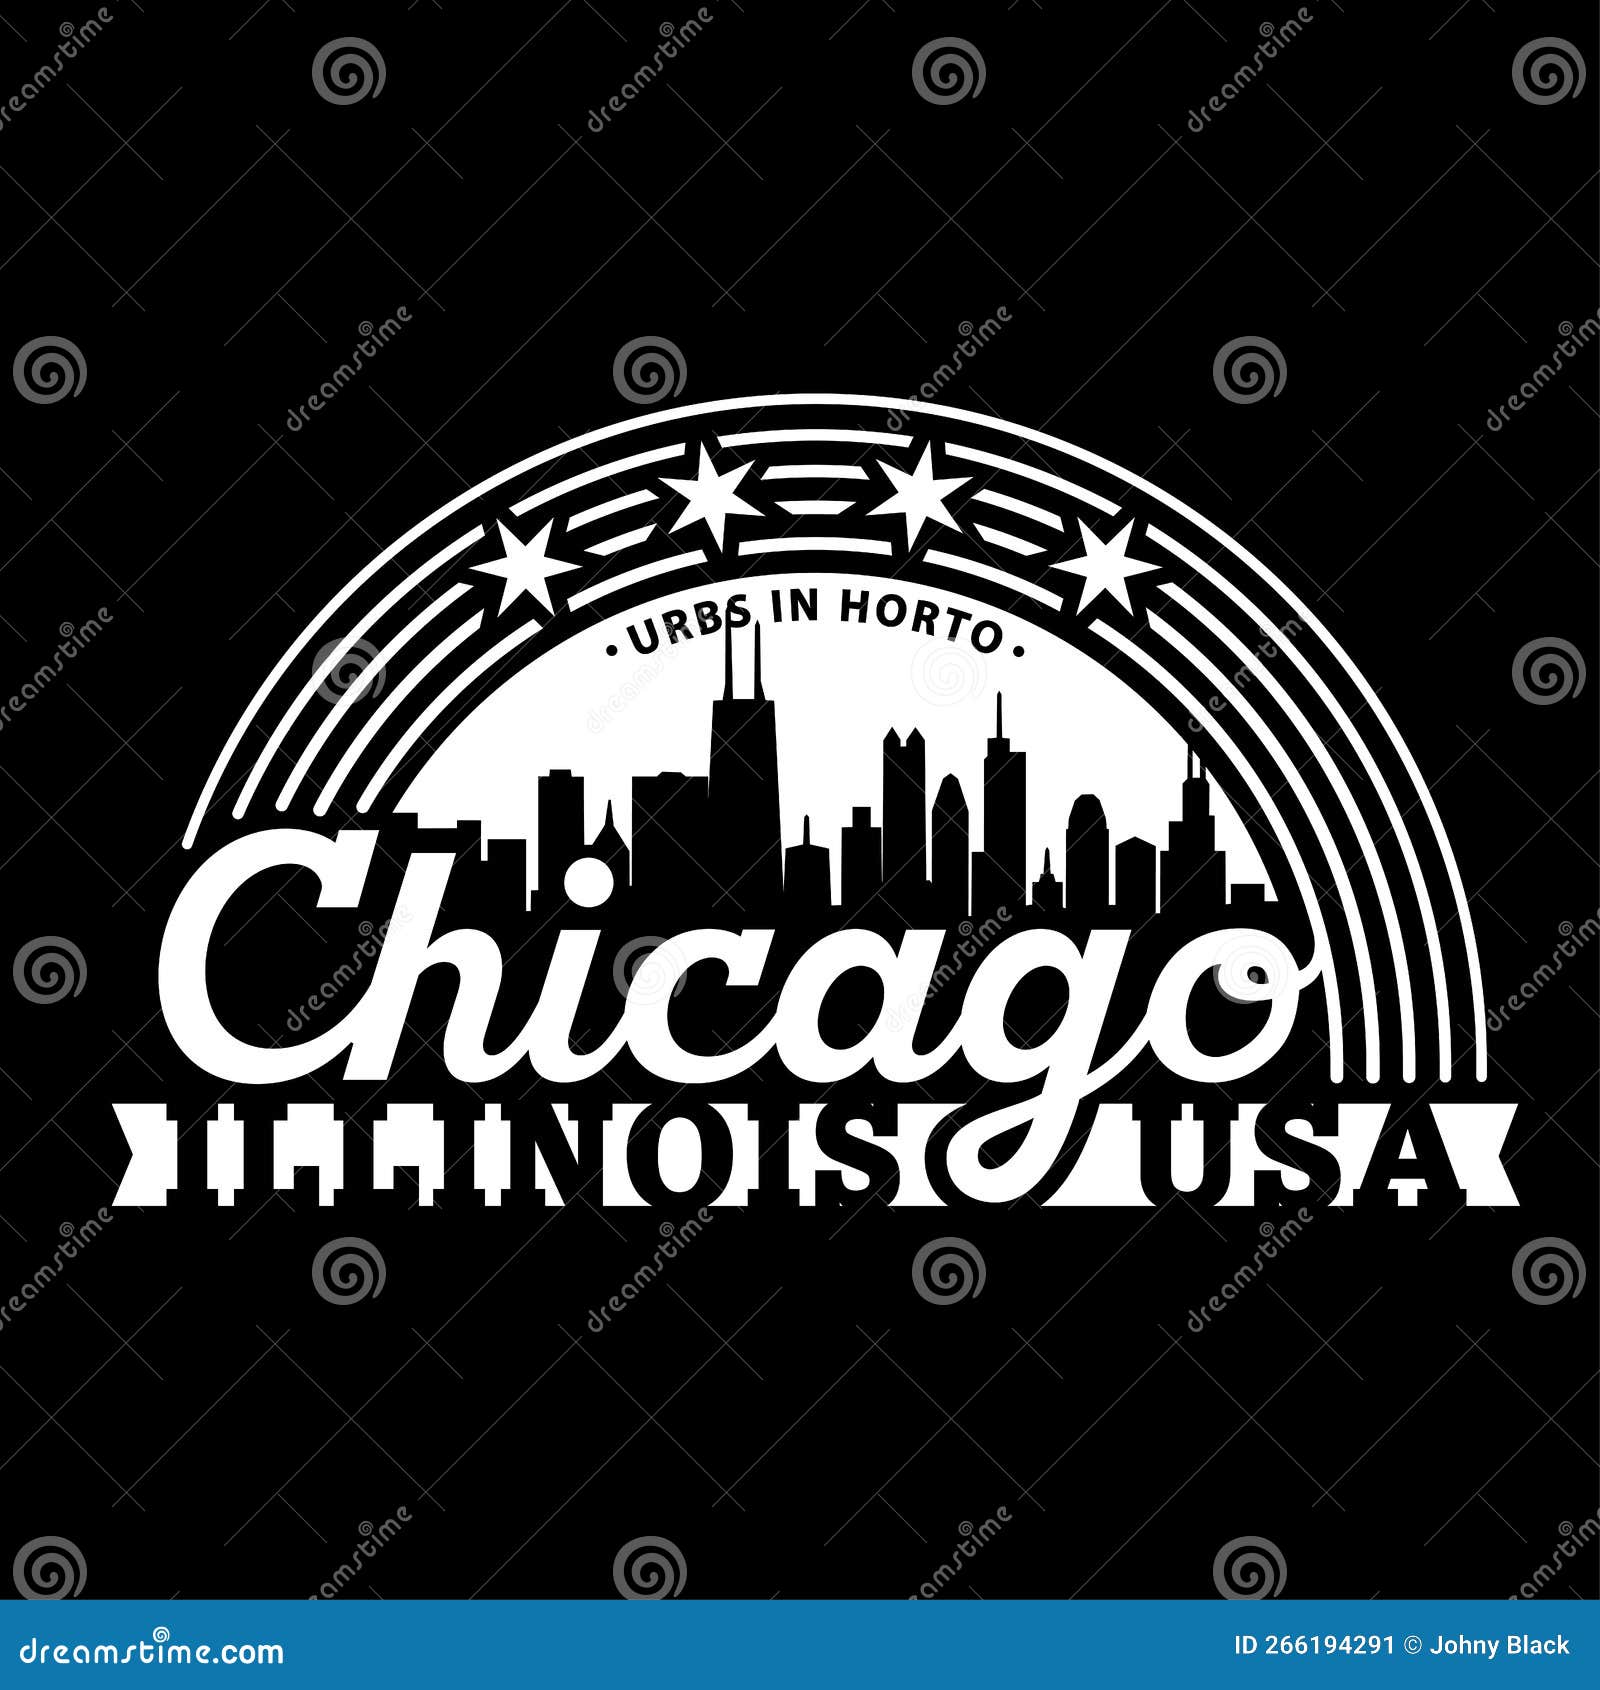 Chicago, Illinois, USA. Logo Design Template. Vector Illustration ...